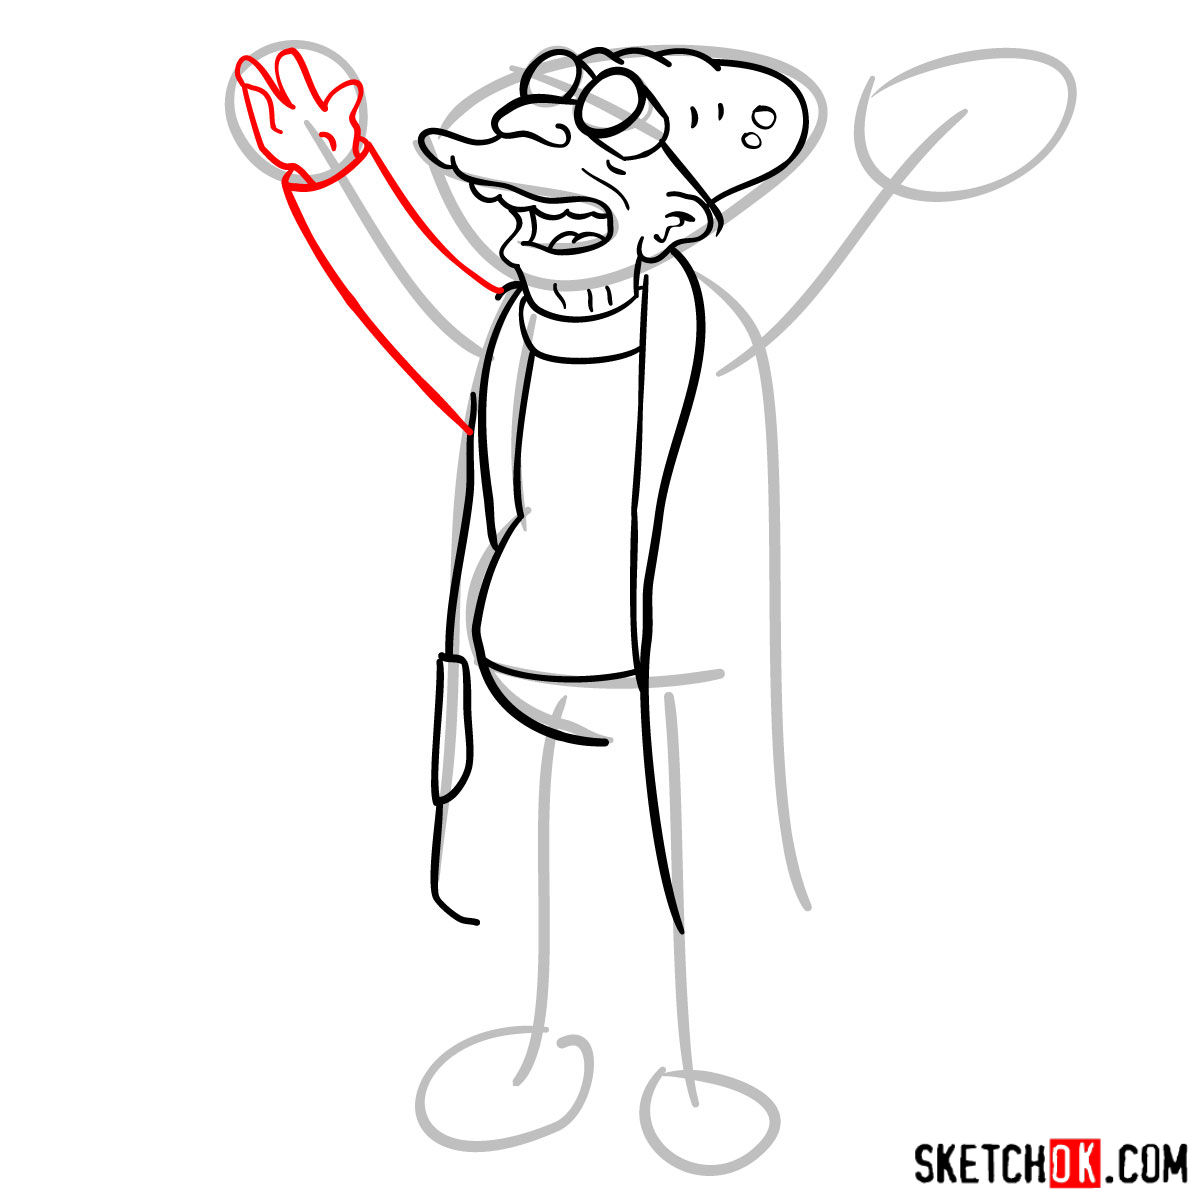 How to draw Professor Farnsworth - step 08